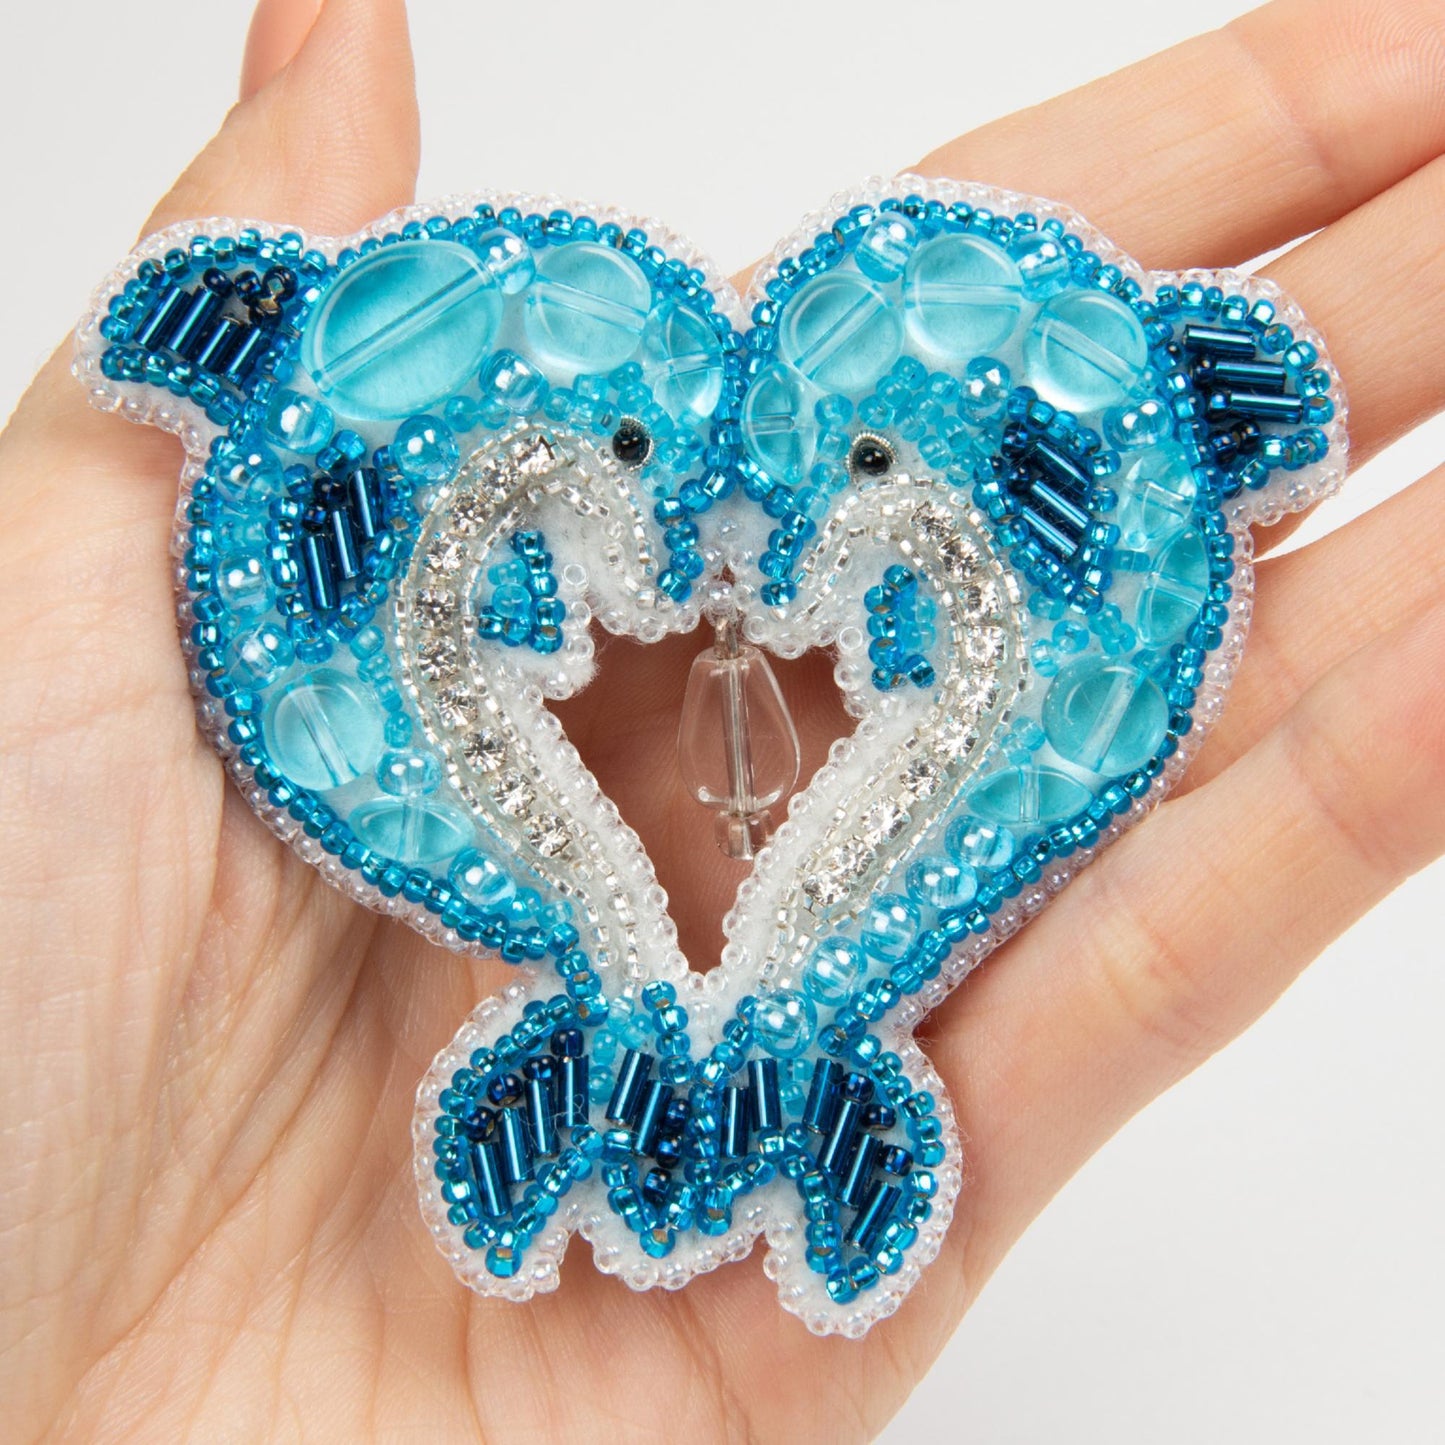 BP-280 Beadwork kit for creating broоch Crystal Art "Dolphins"